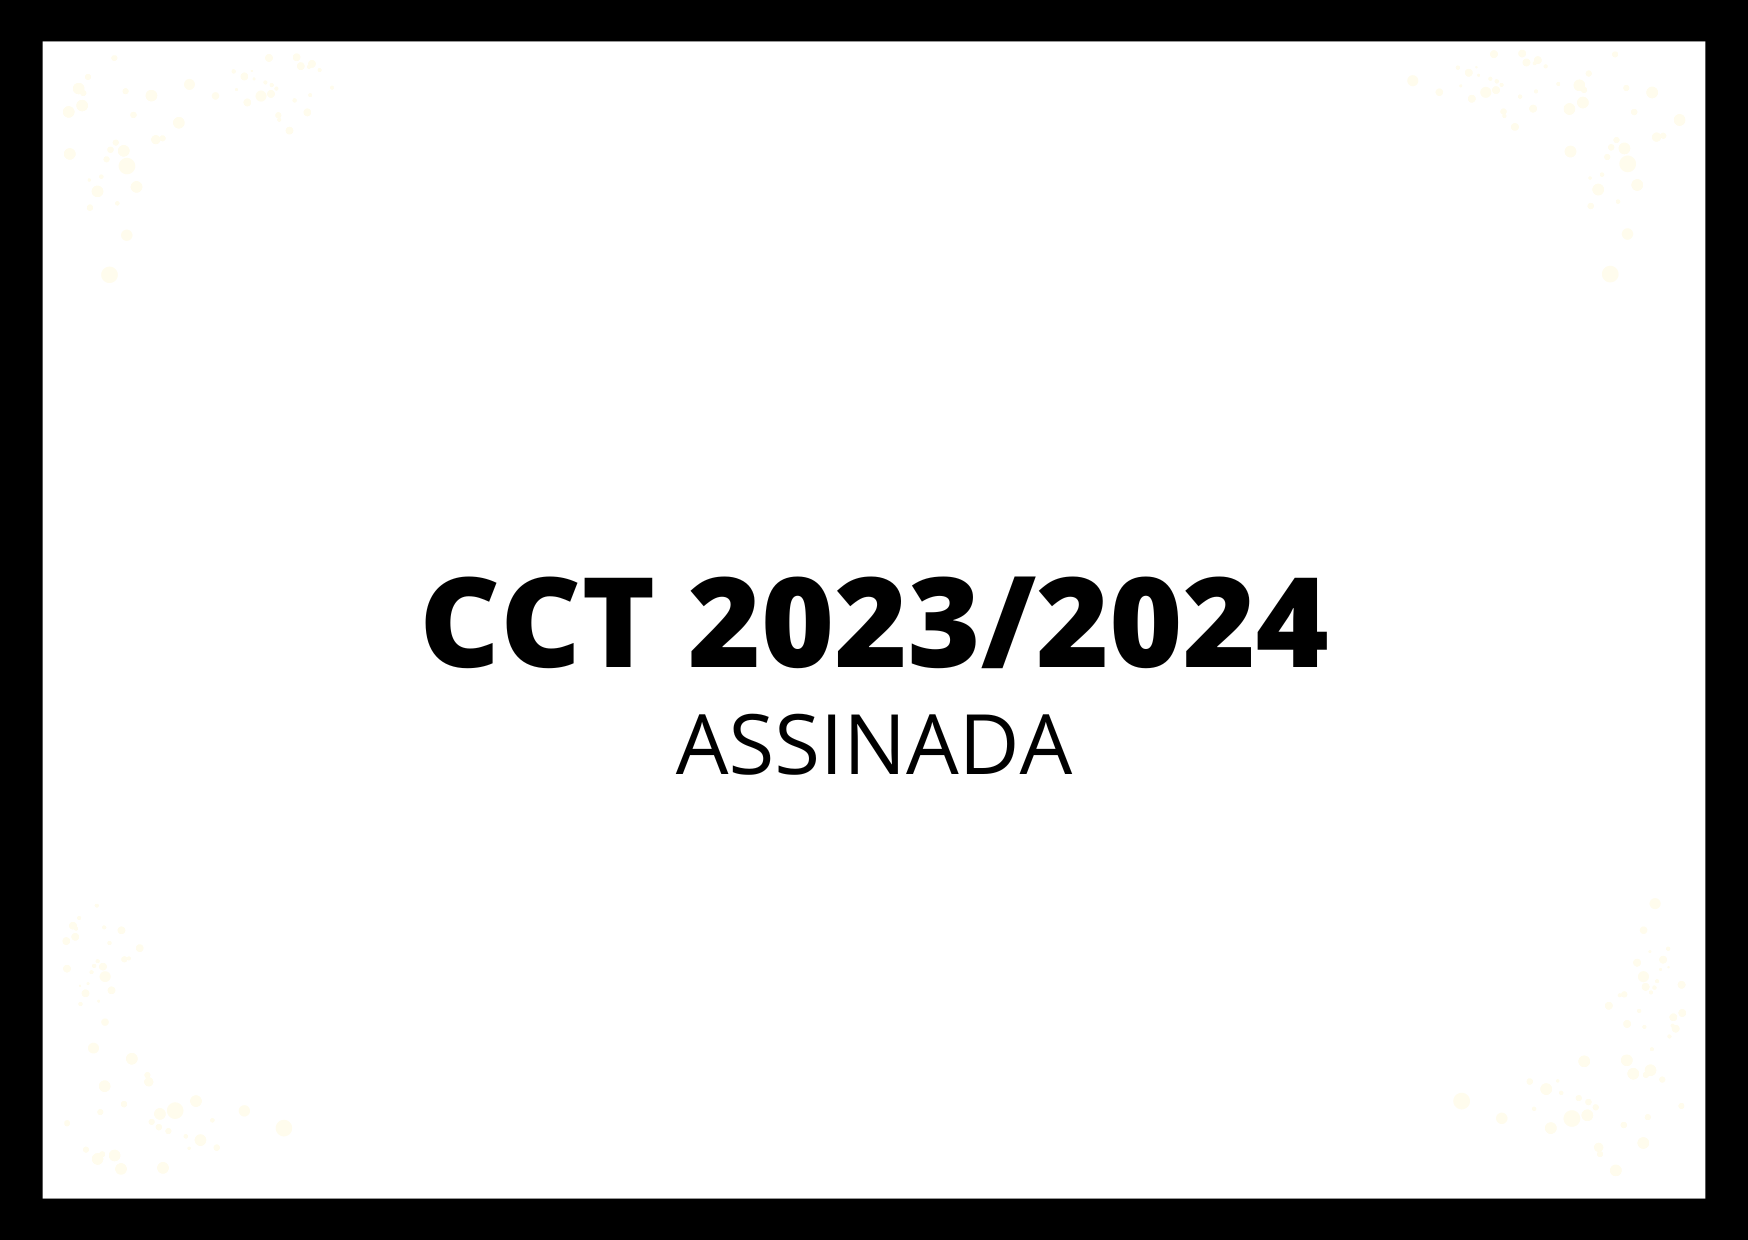 CCT 2023/2024